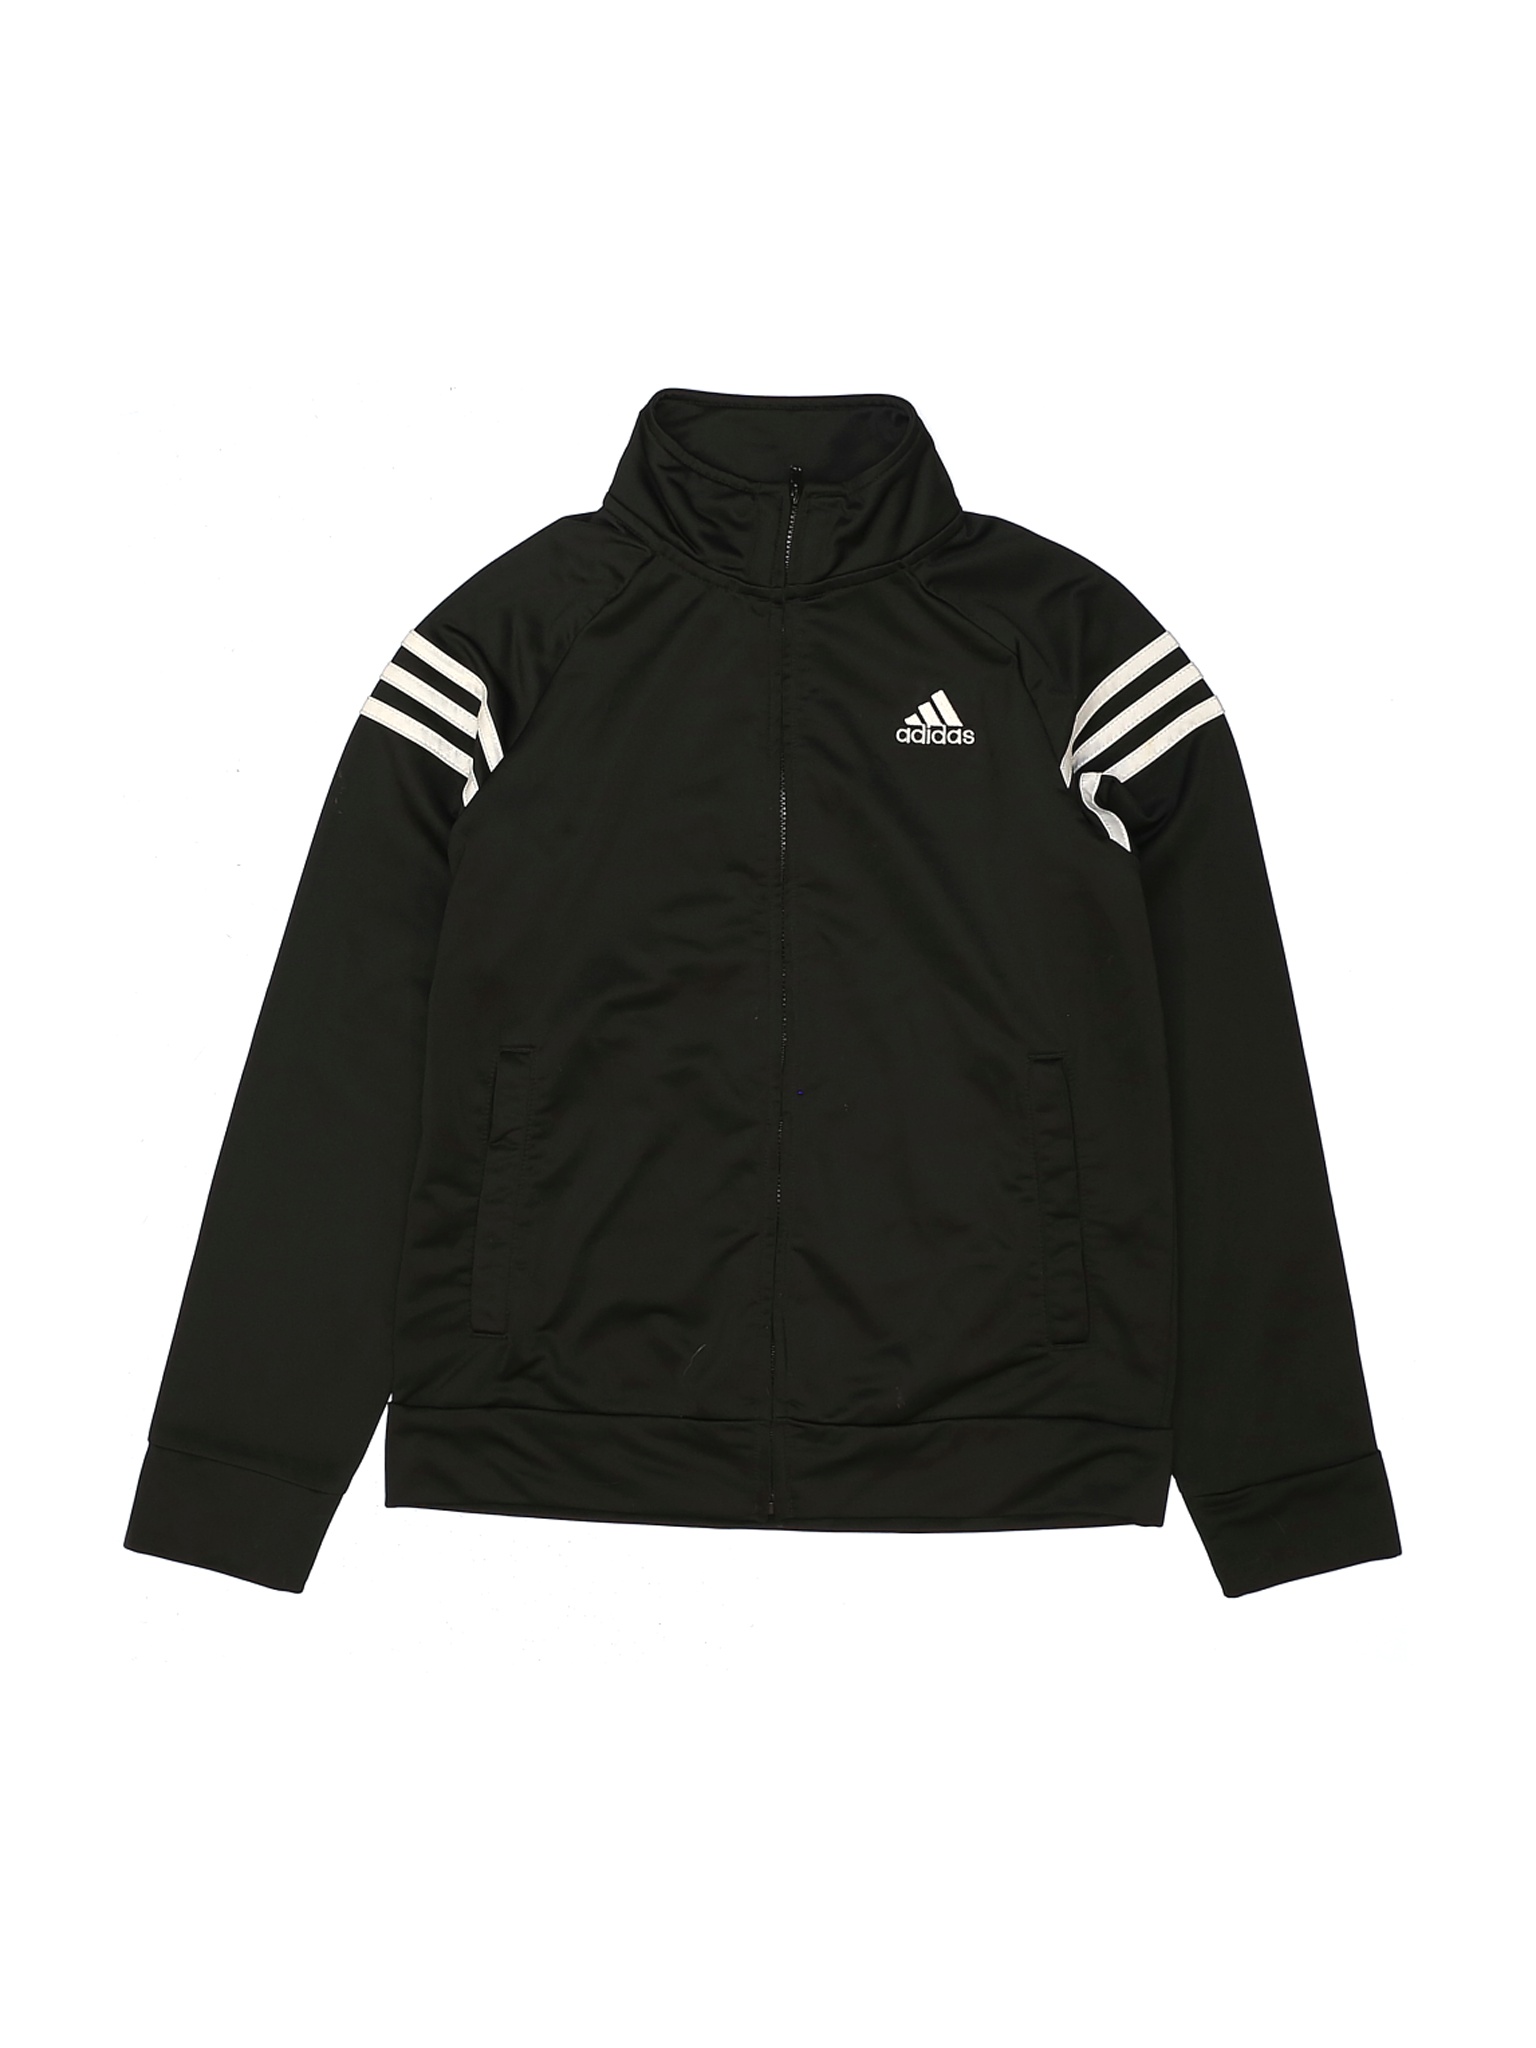 Adidas Boys Black Track Jacket M Youth | eBay